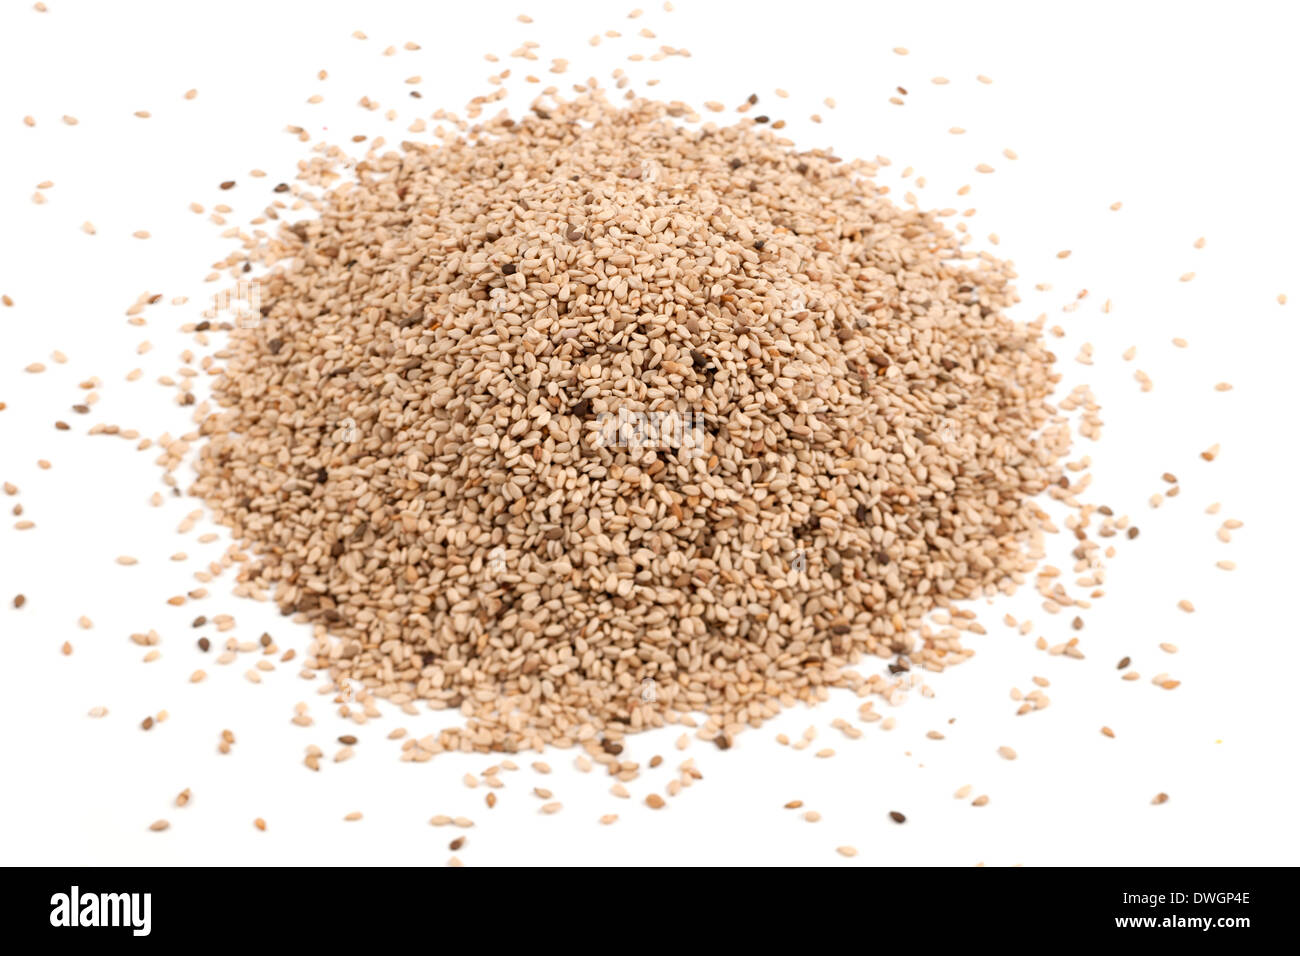 Pile of Sesame seeds Stock Photo